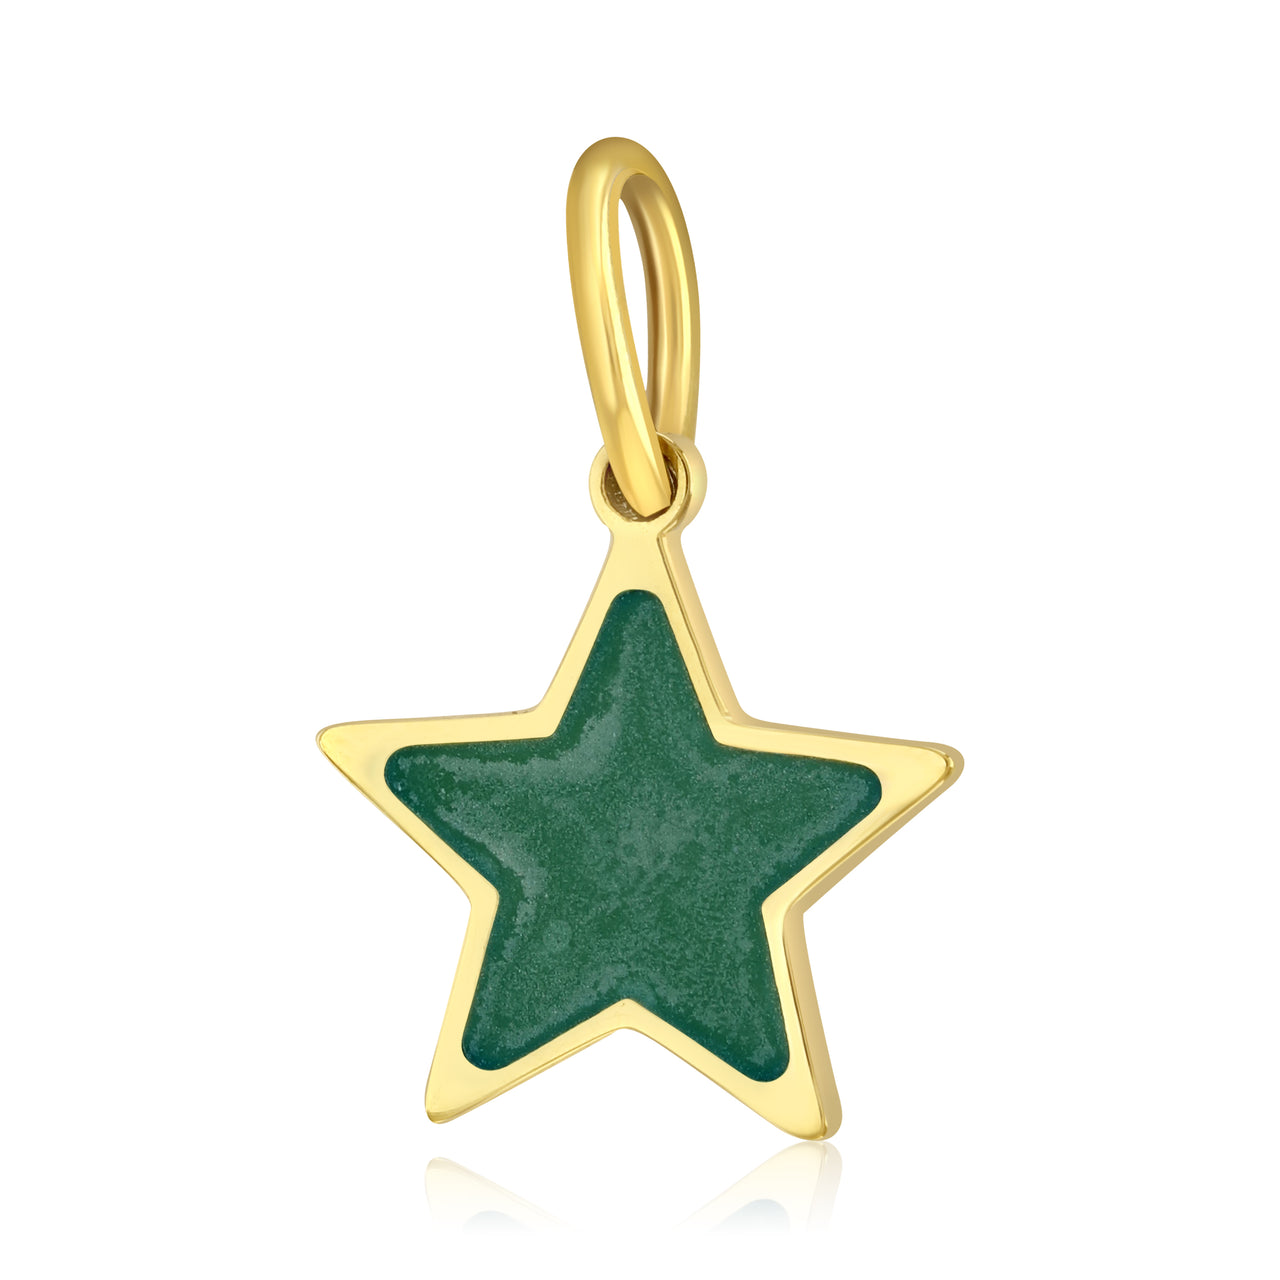 Gold star charm with emerald enamel